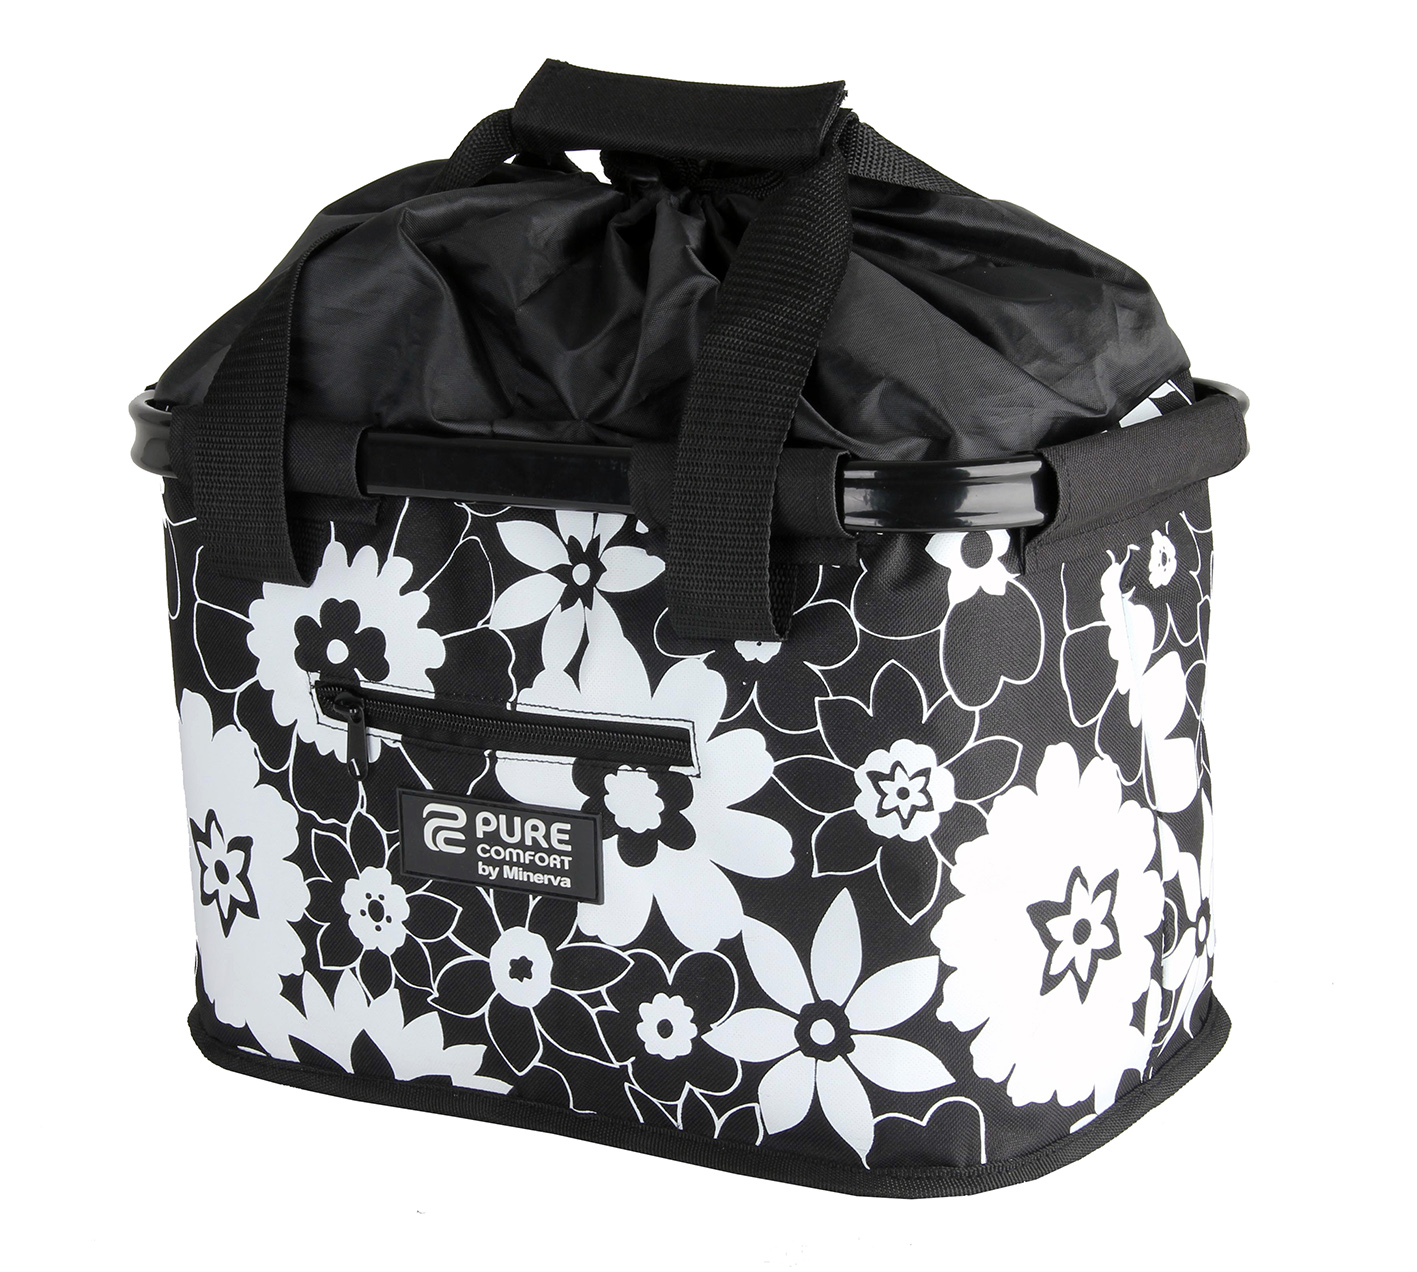 Fiets shopping tas zwart-wit bloemen